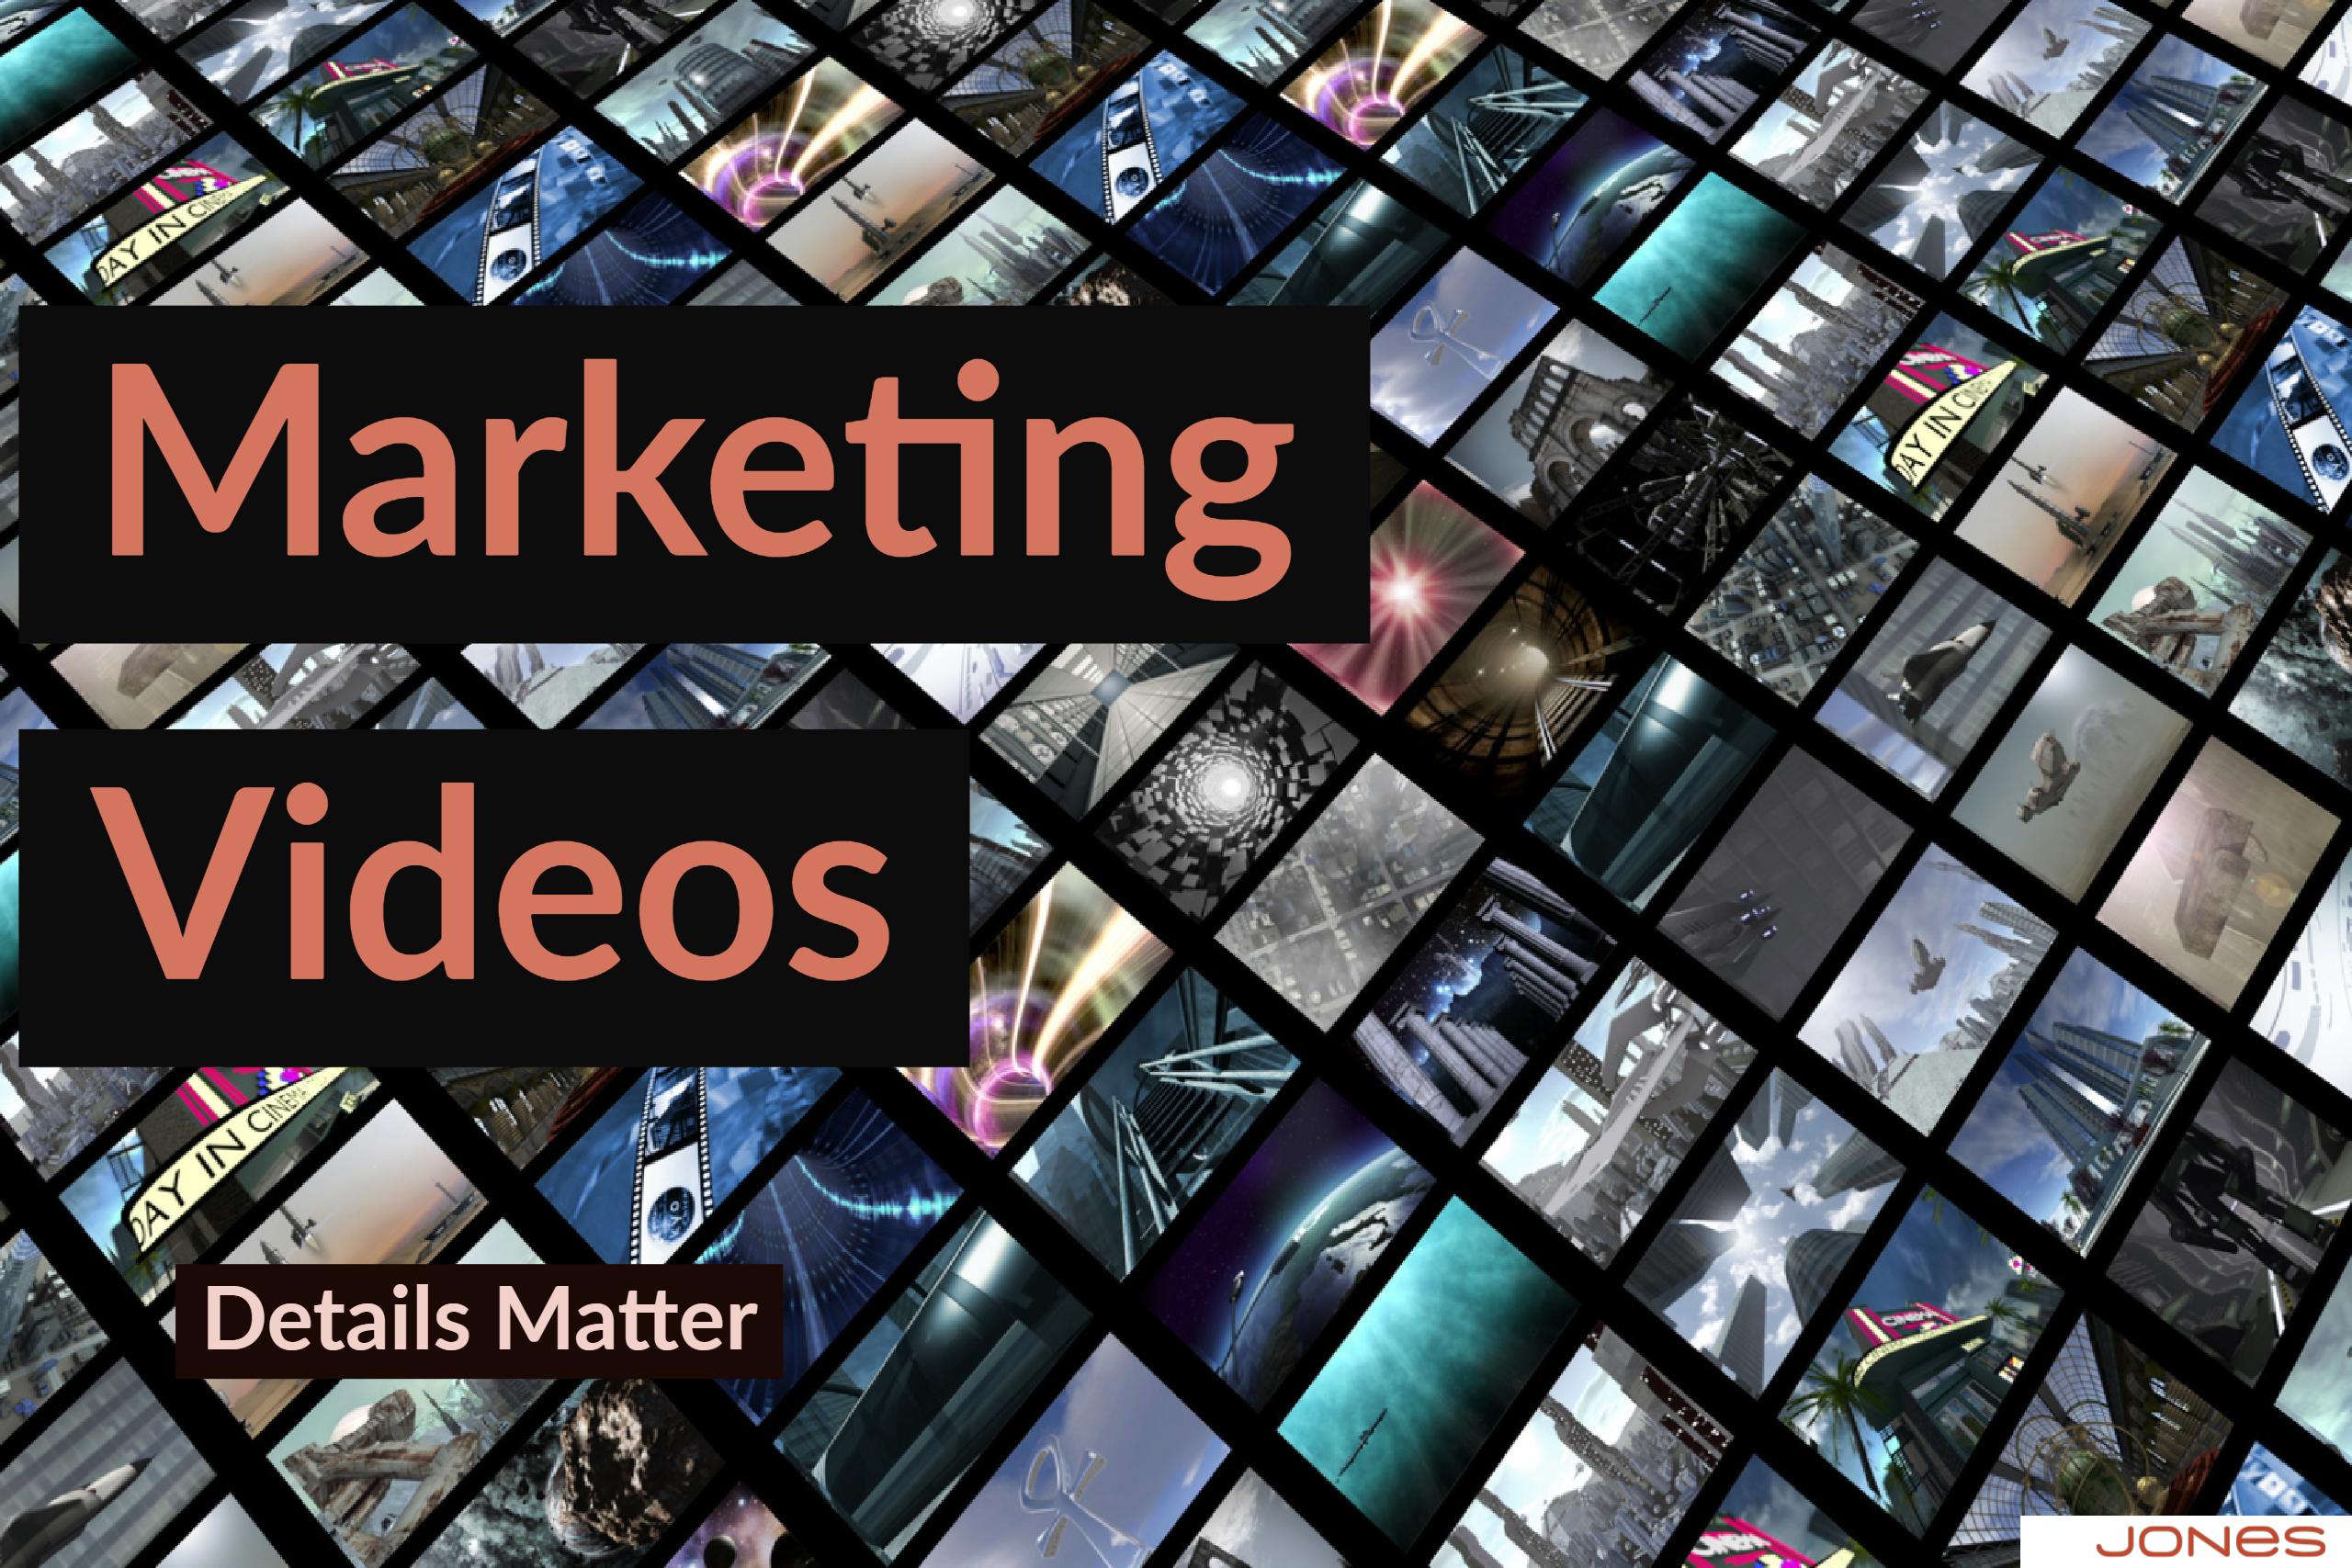 When Creating Marketing Videos, Details Matter [infographic]